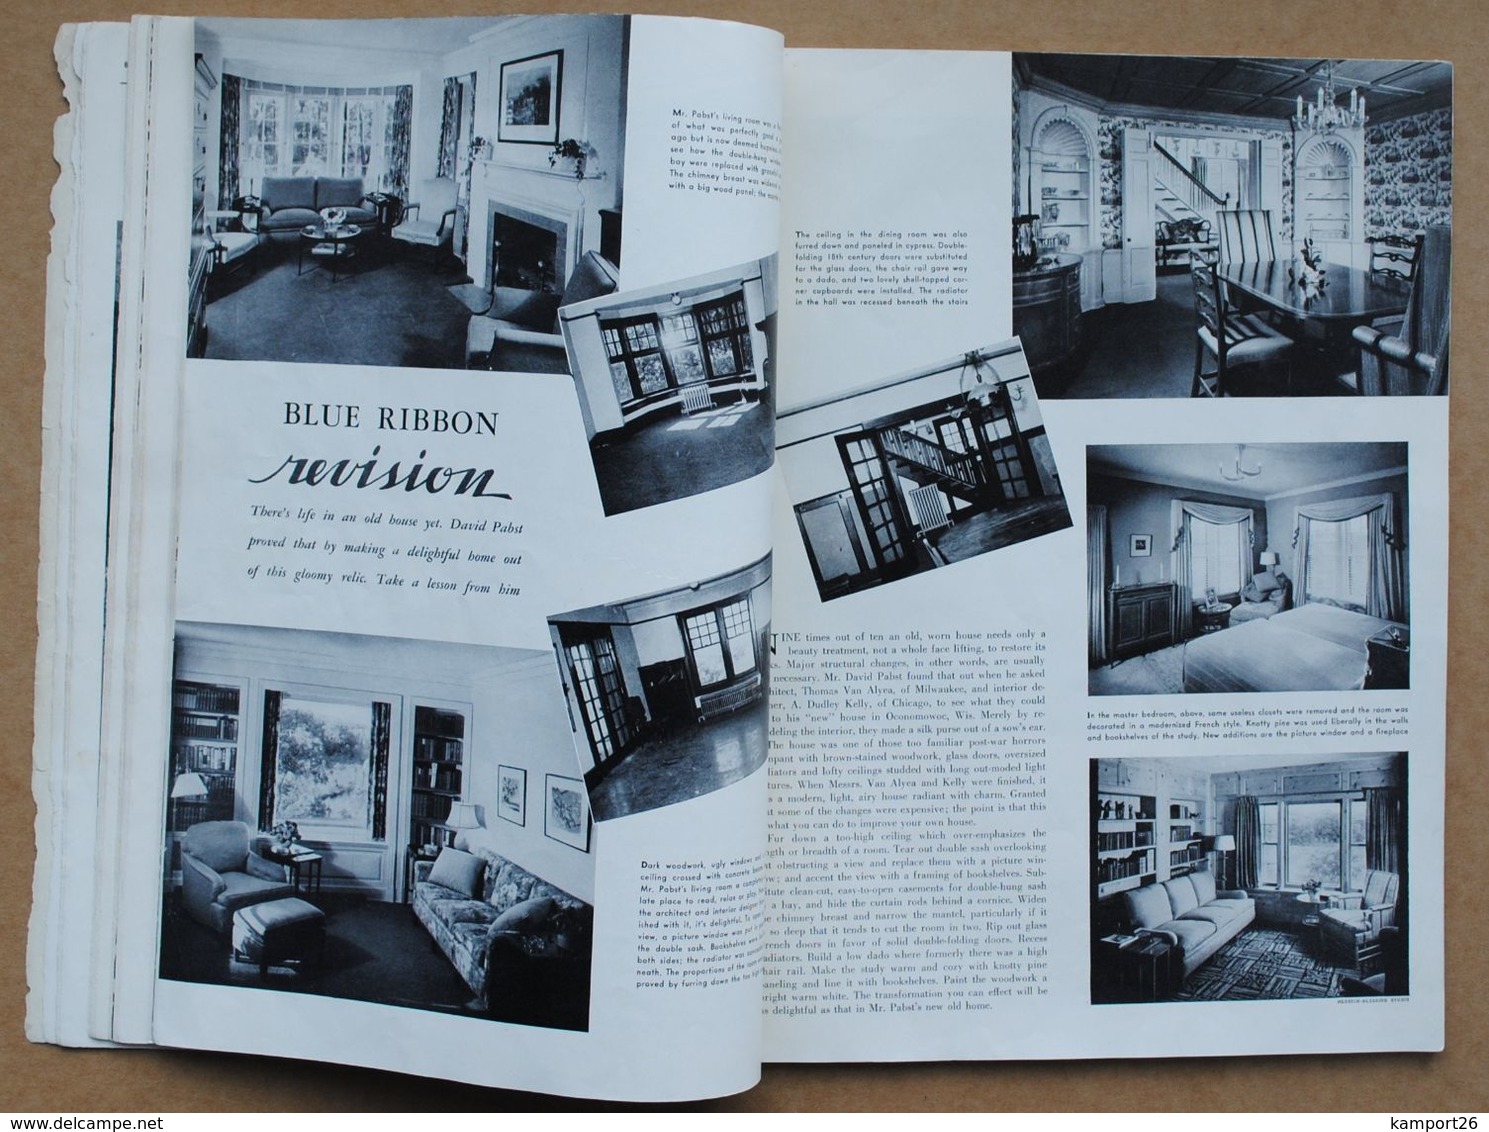 1941 HOUSE BEAUTIFUL September BUILDING Magazine COOKING Furnishing GARDENING History USA - Thuis